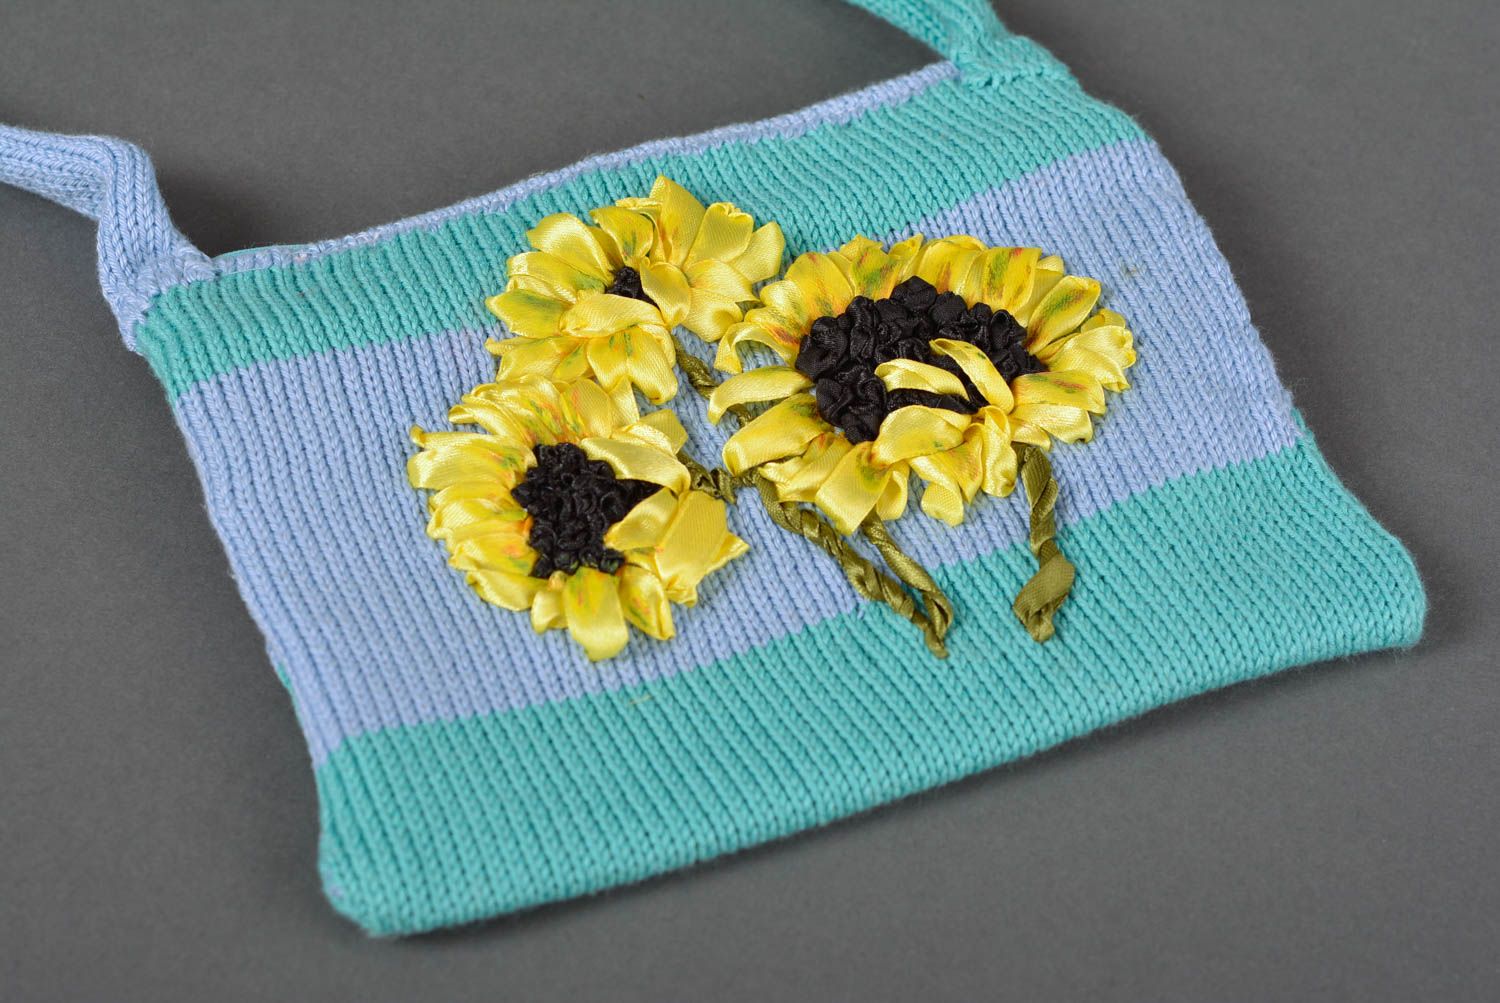 Stylish handmade handbag designs knitted bag shoulder bag accessories for girls photo 4